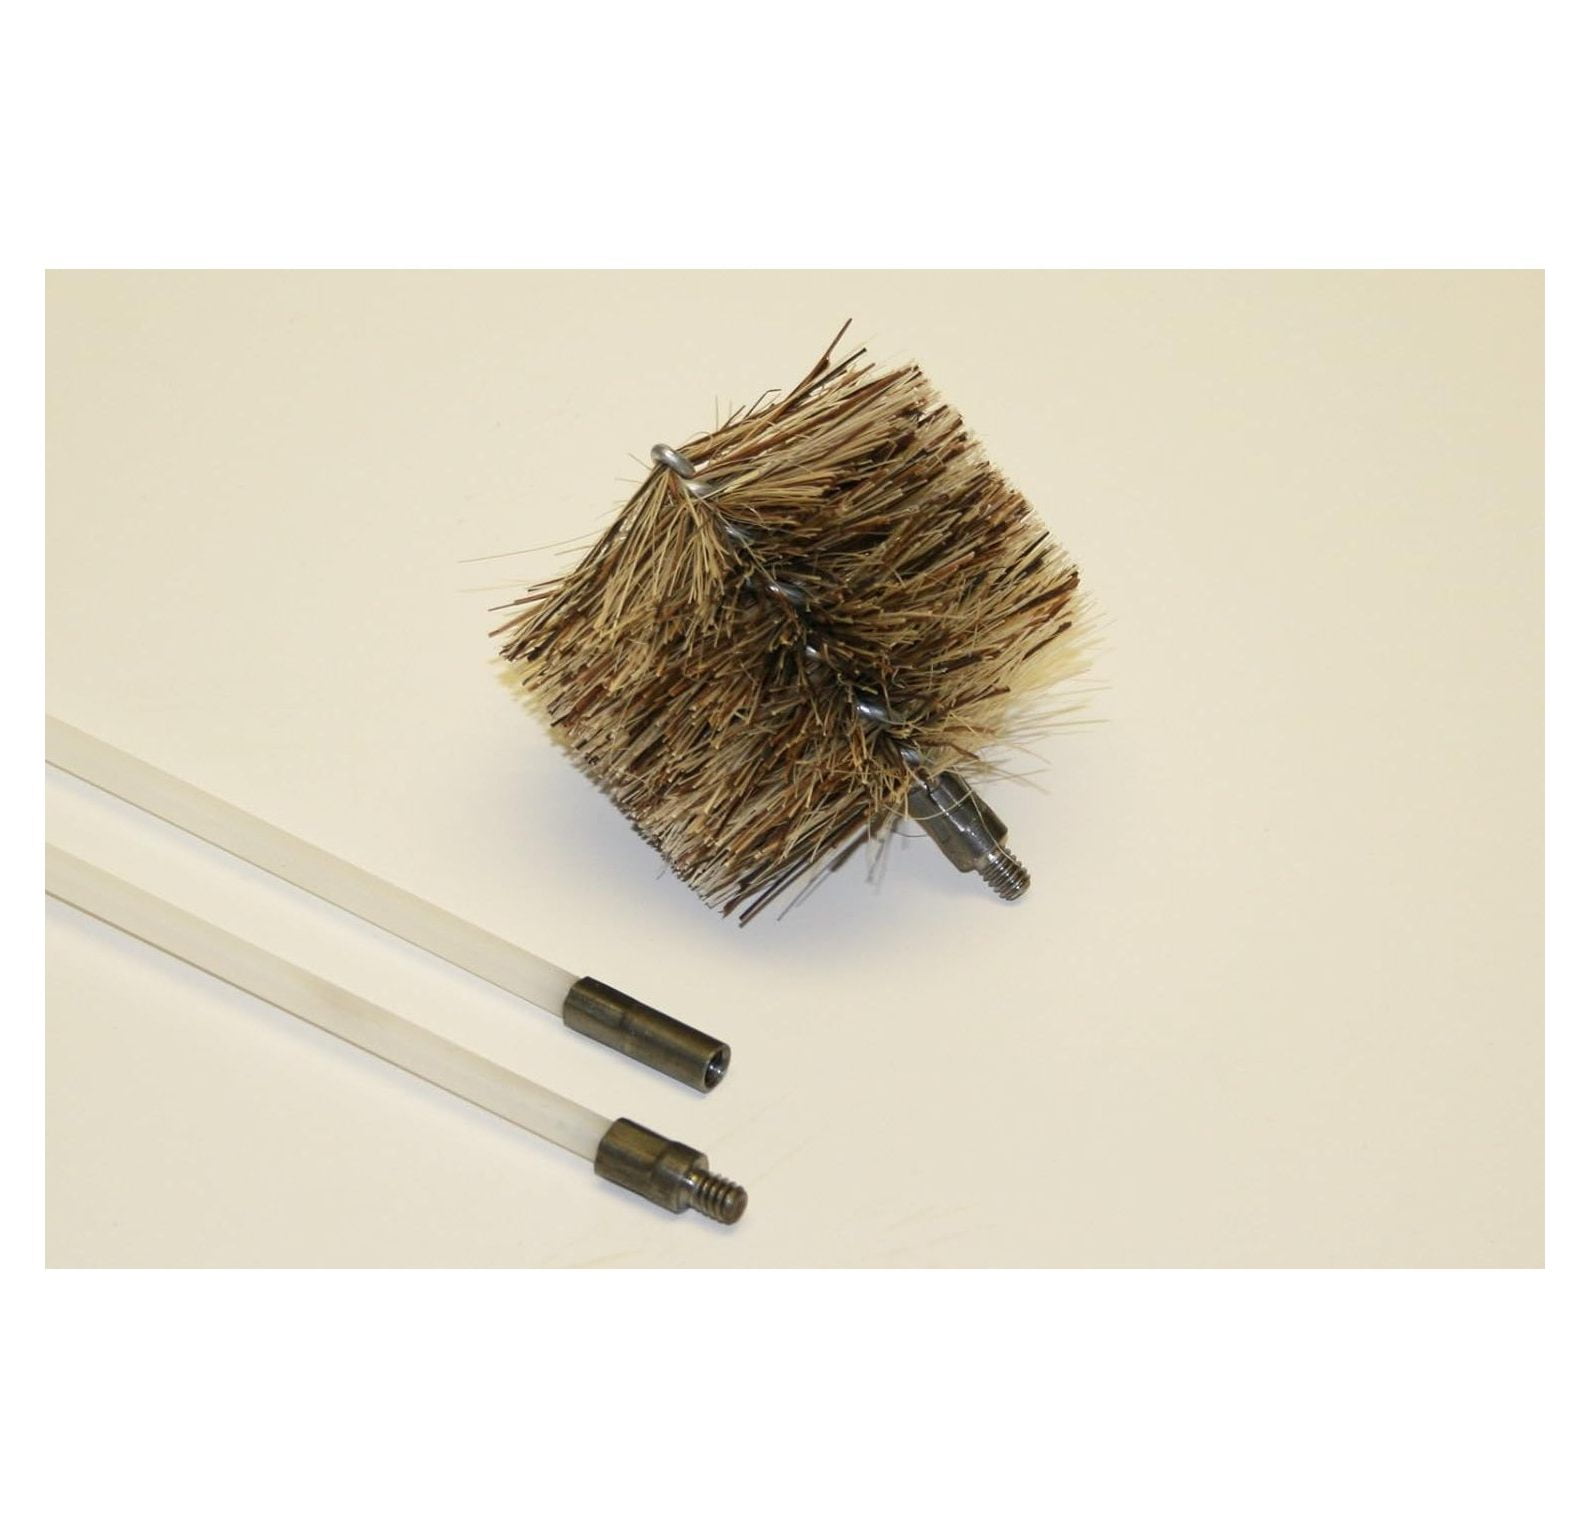 4 Pellet Stove Flue Vent Cleaning Brush